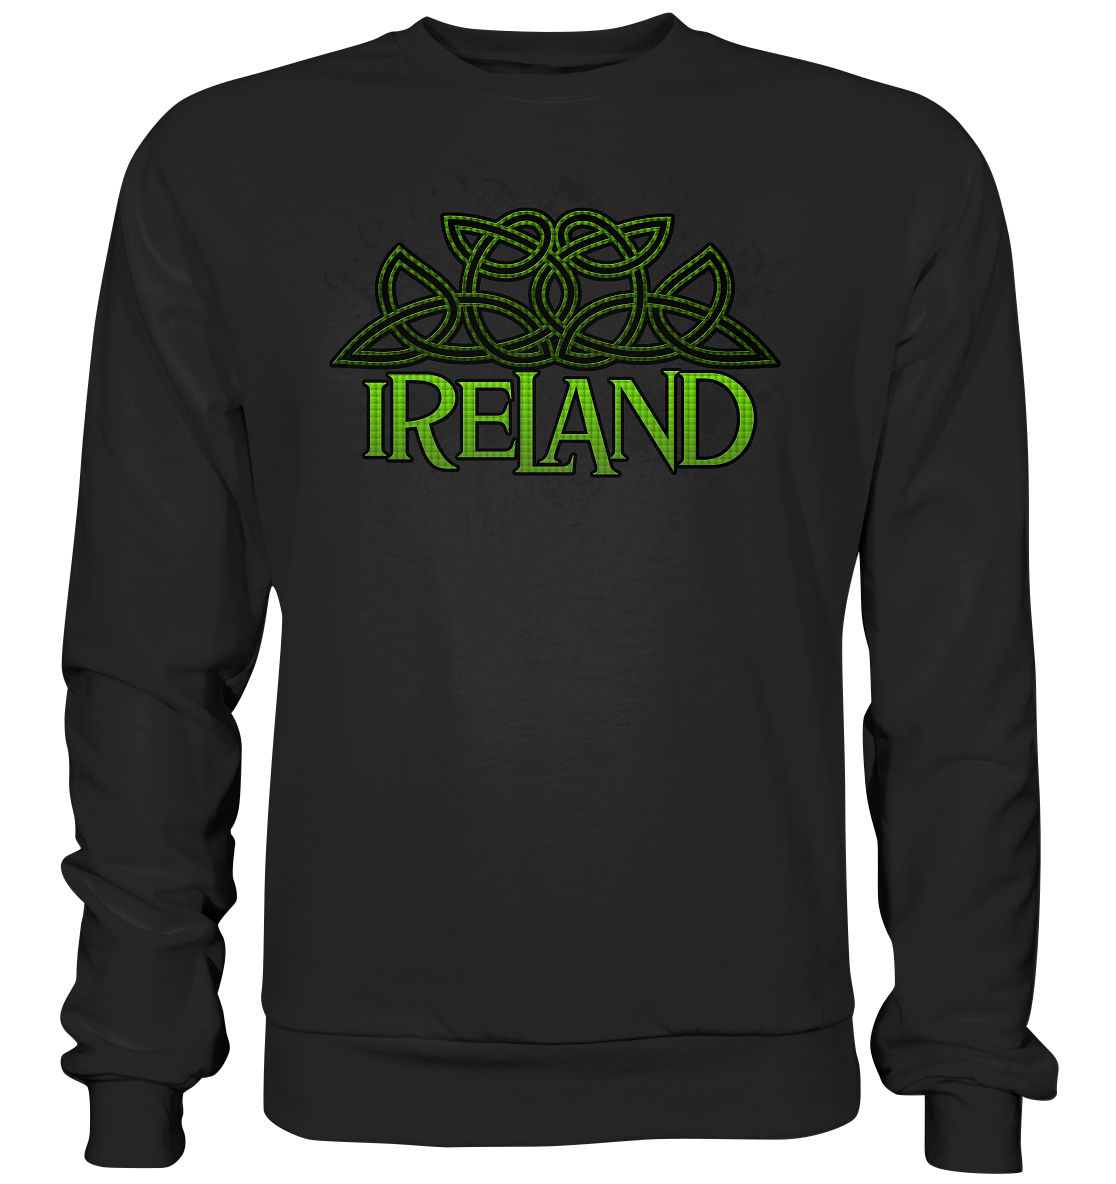 Ireland "Celtic Knot" - Premium Sweatshirt